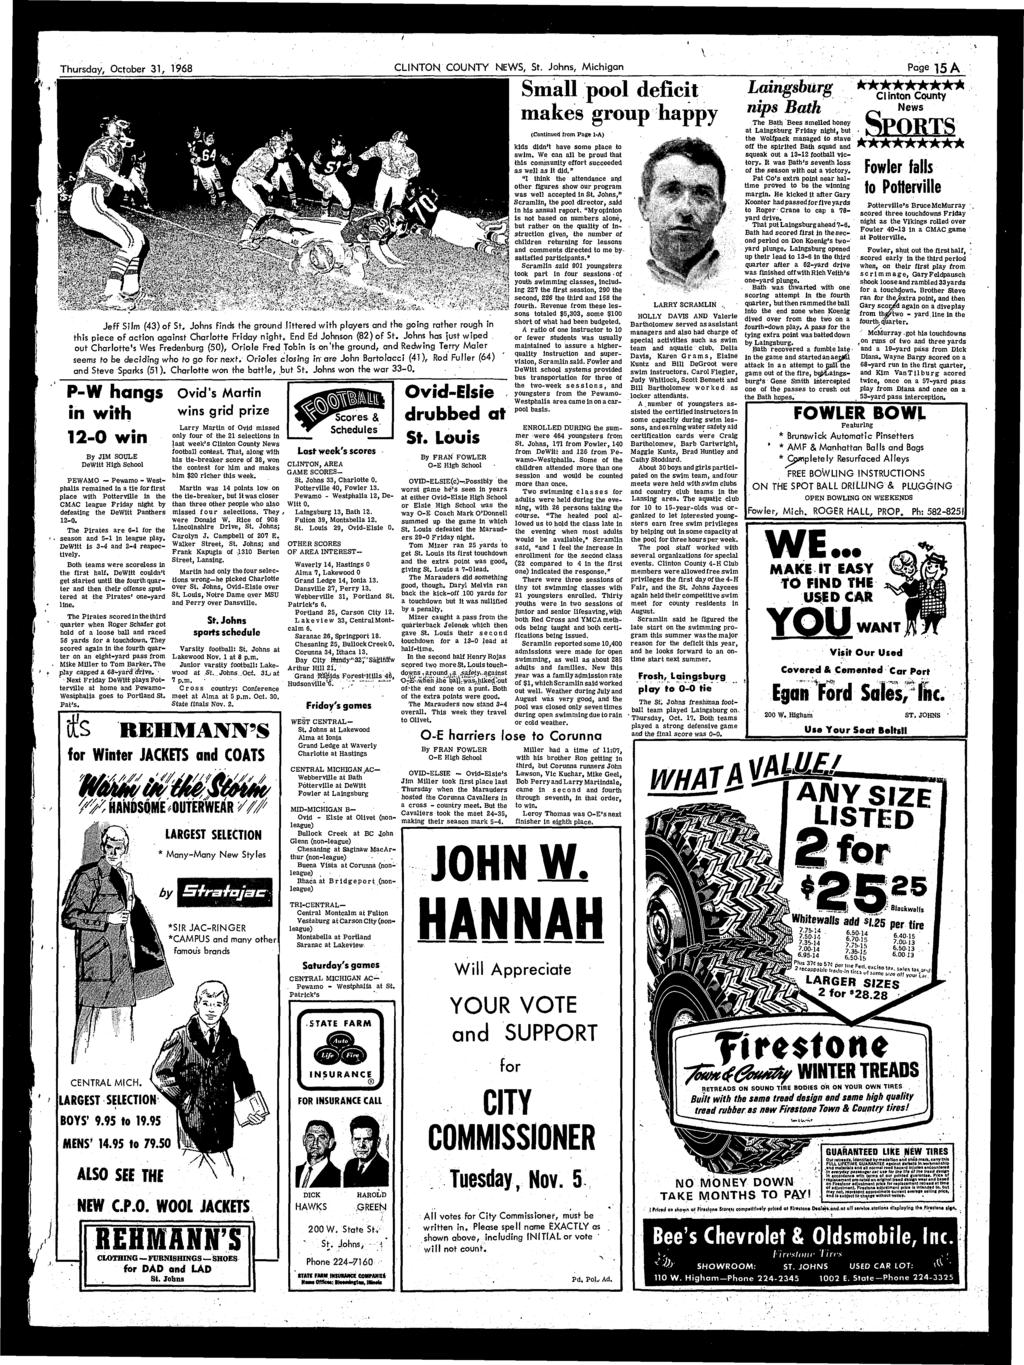 Thursday, October 31, 1968 CLINTON. COUNTY NEWS, St.